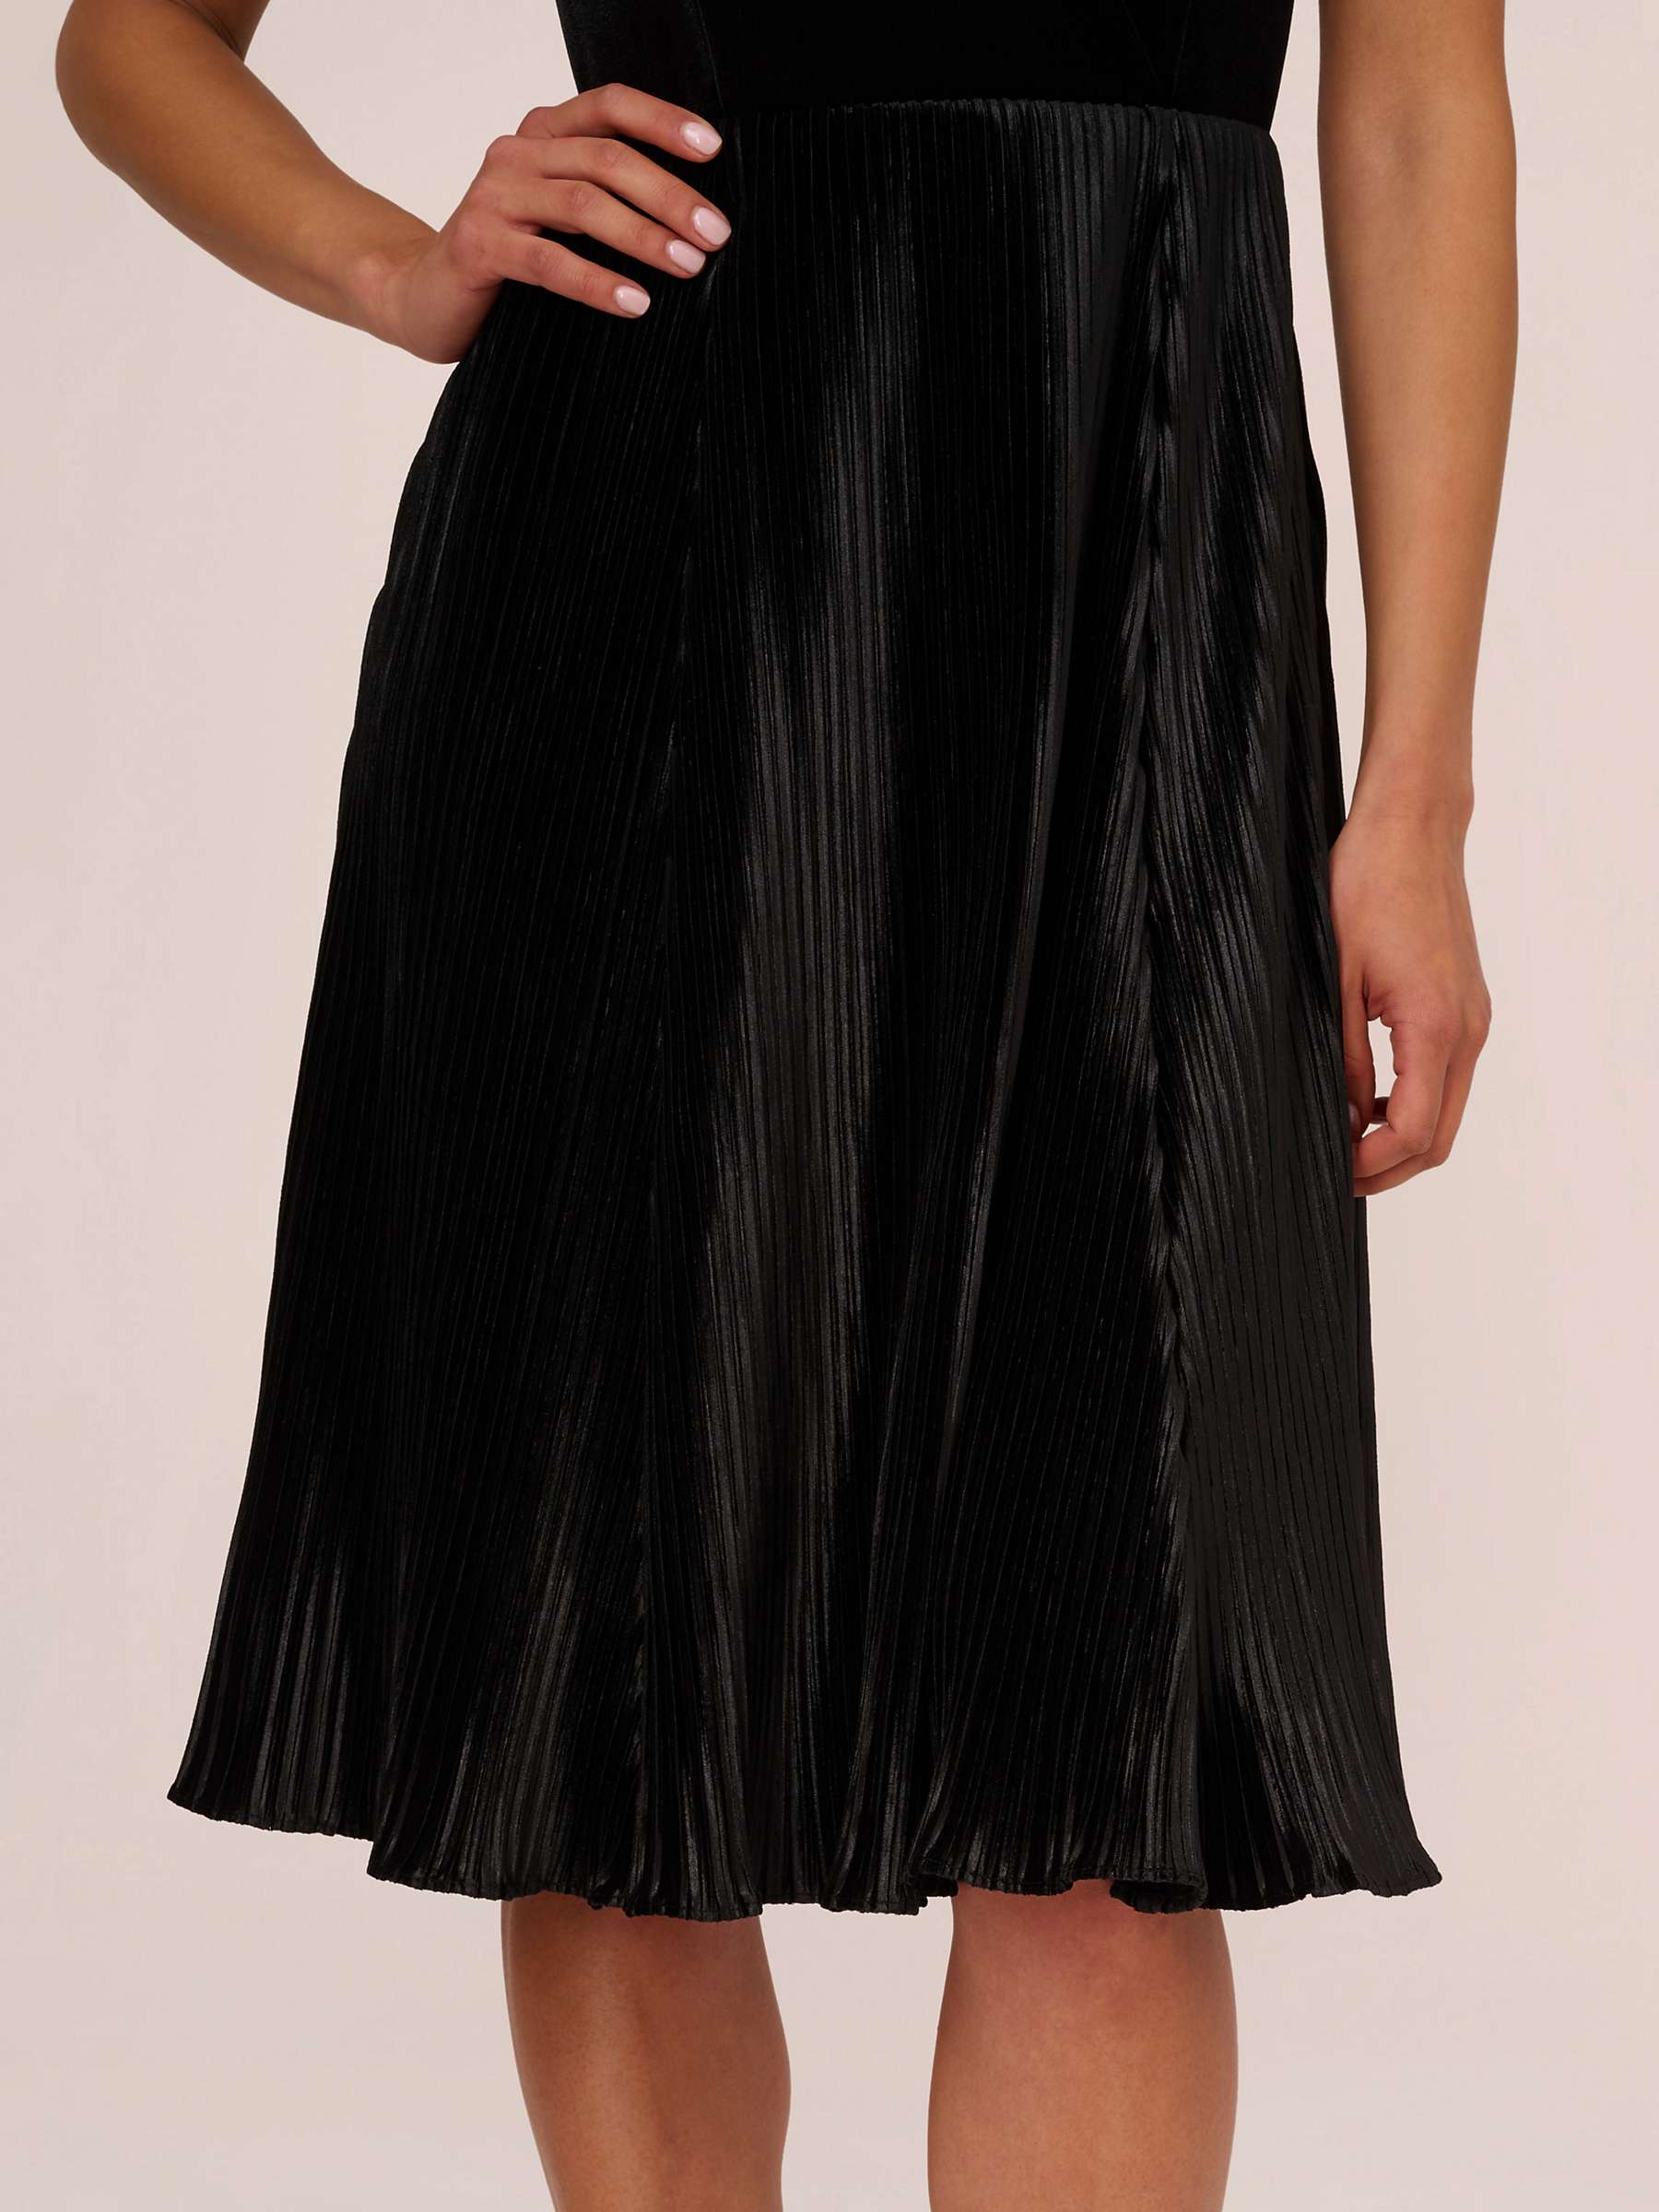 Adrianna Papell Velvet Pleated Dress, Black at John Lewis & Partners